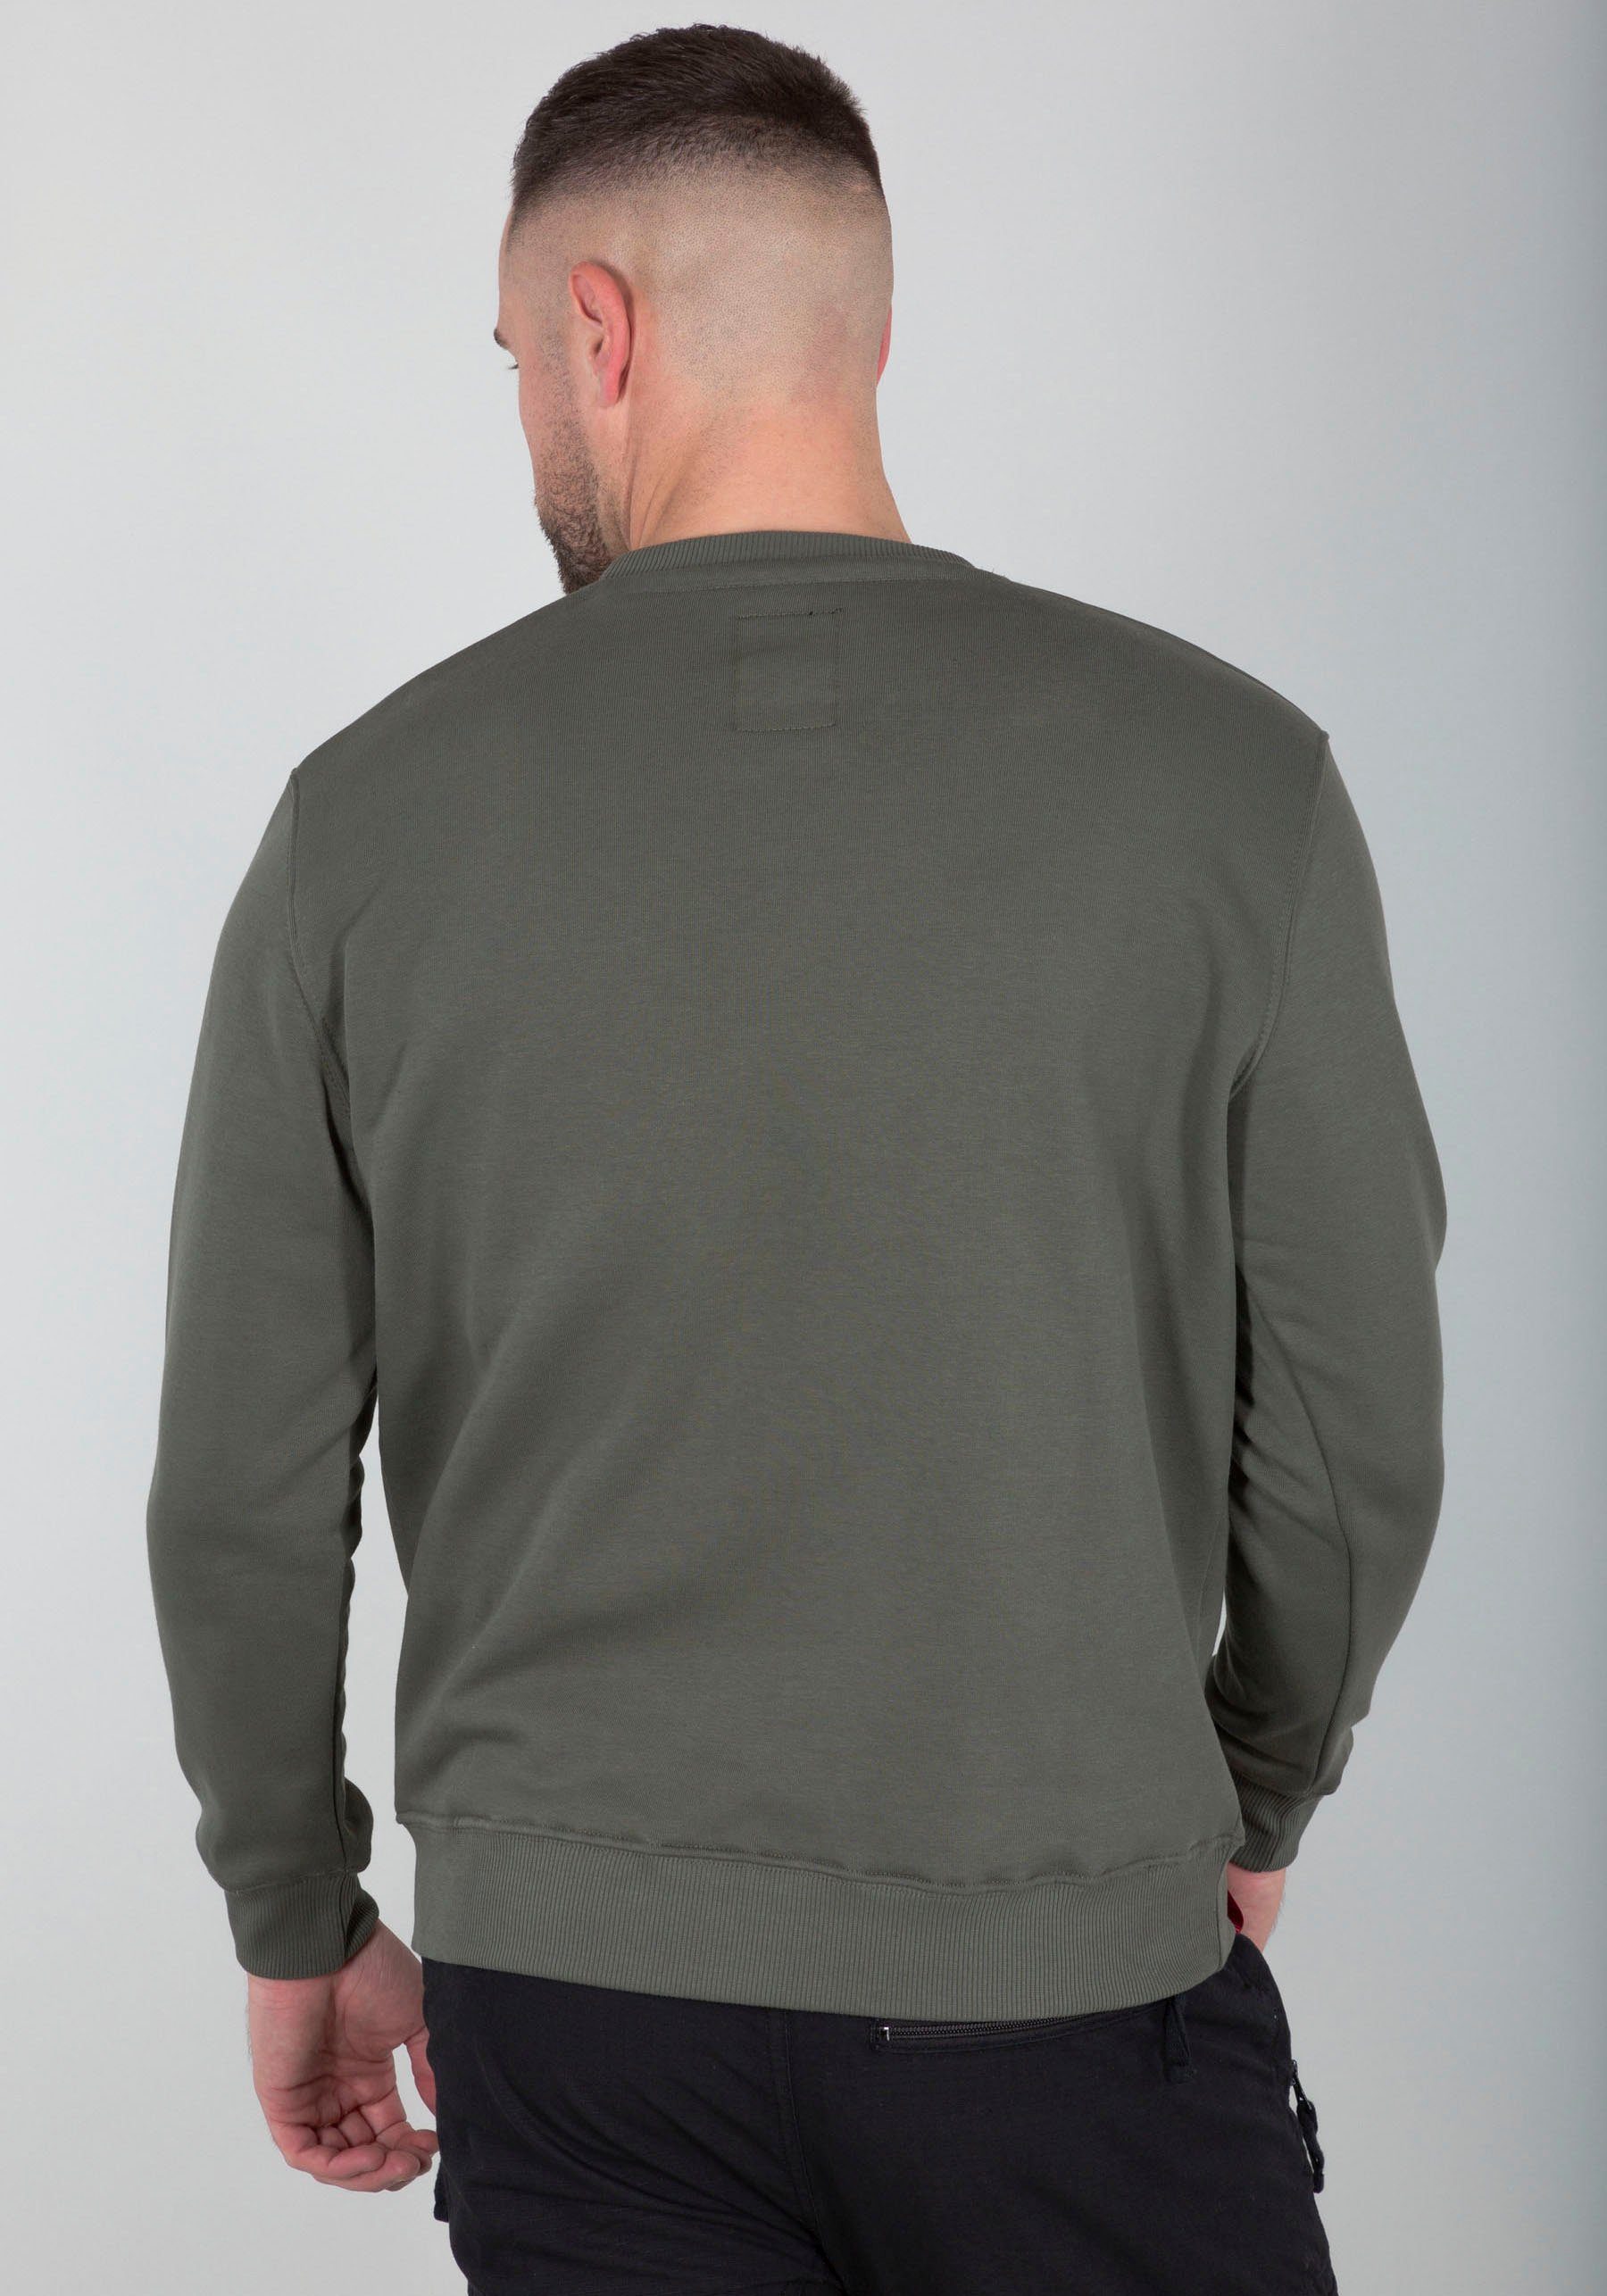 Alpha Industries Sweatshirt dark Basic Sweater olive